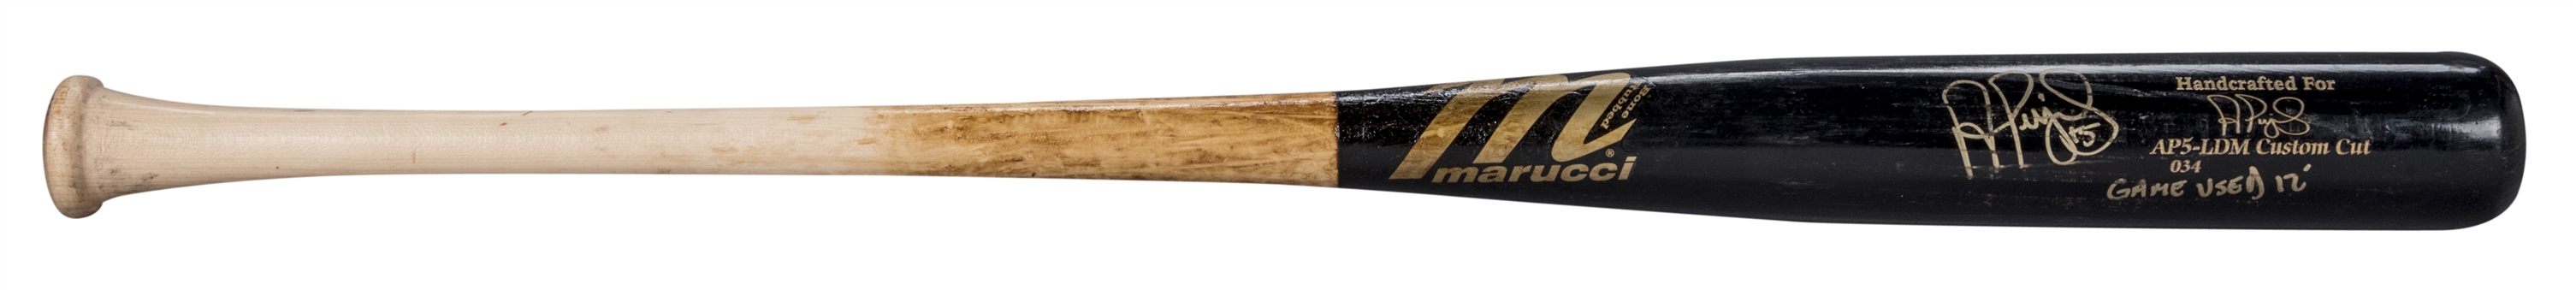 2012 Albert Pujols Game Used and Signed Marucci AP5-LDM Custom Cut Bat (PSA/DNA GU 10 & MLB Authenticated)